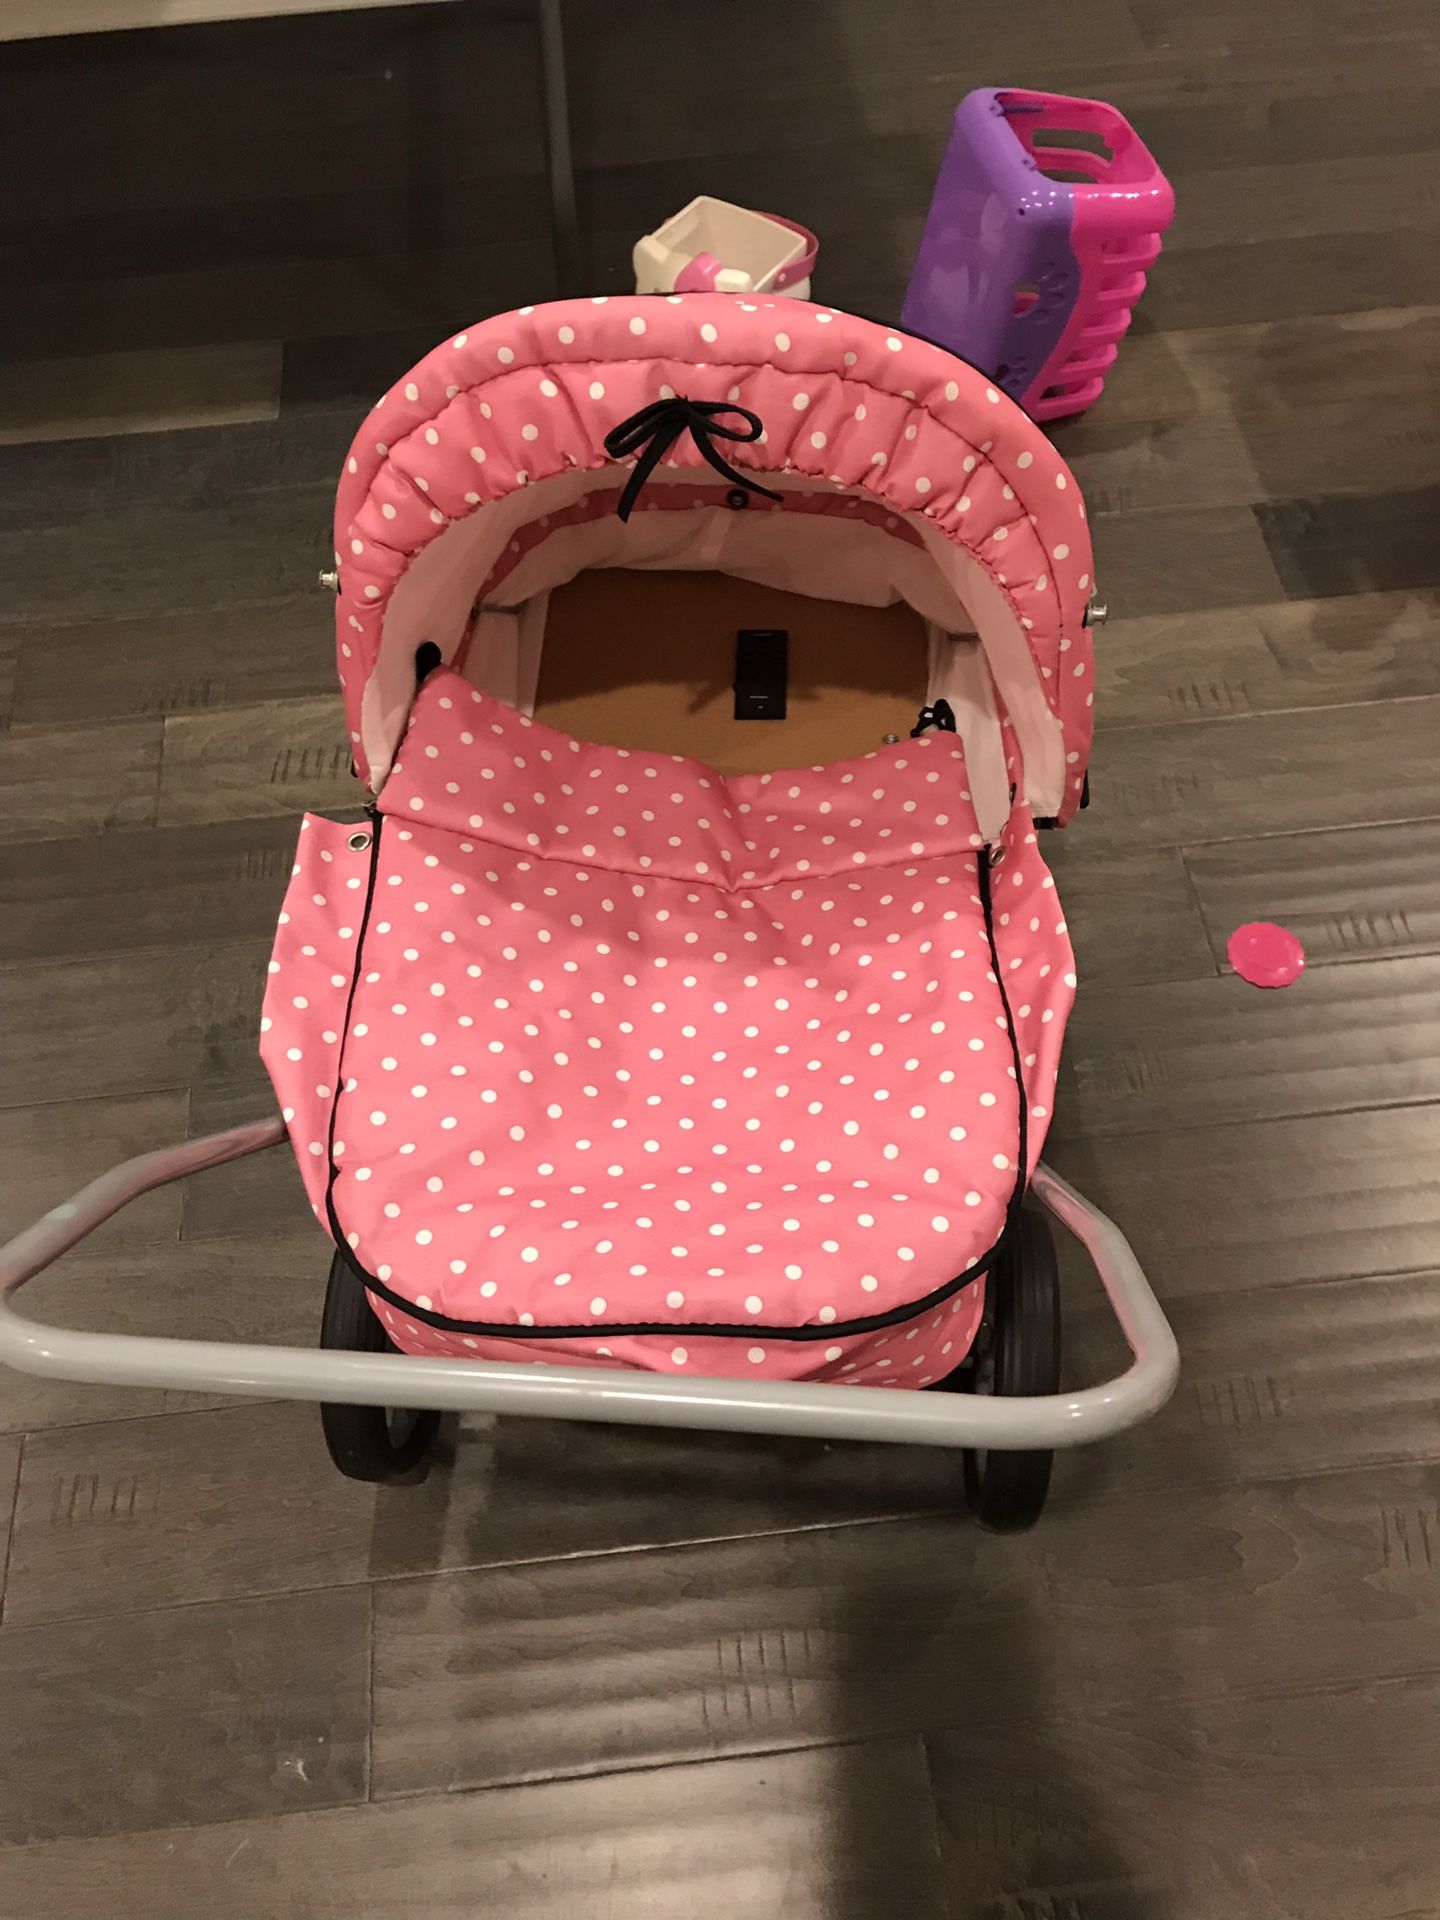 Baby play stroller